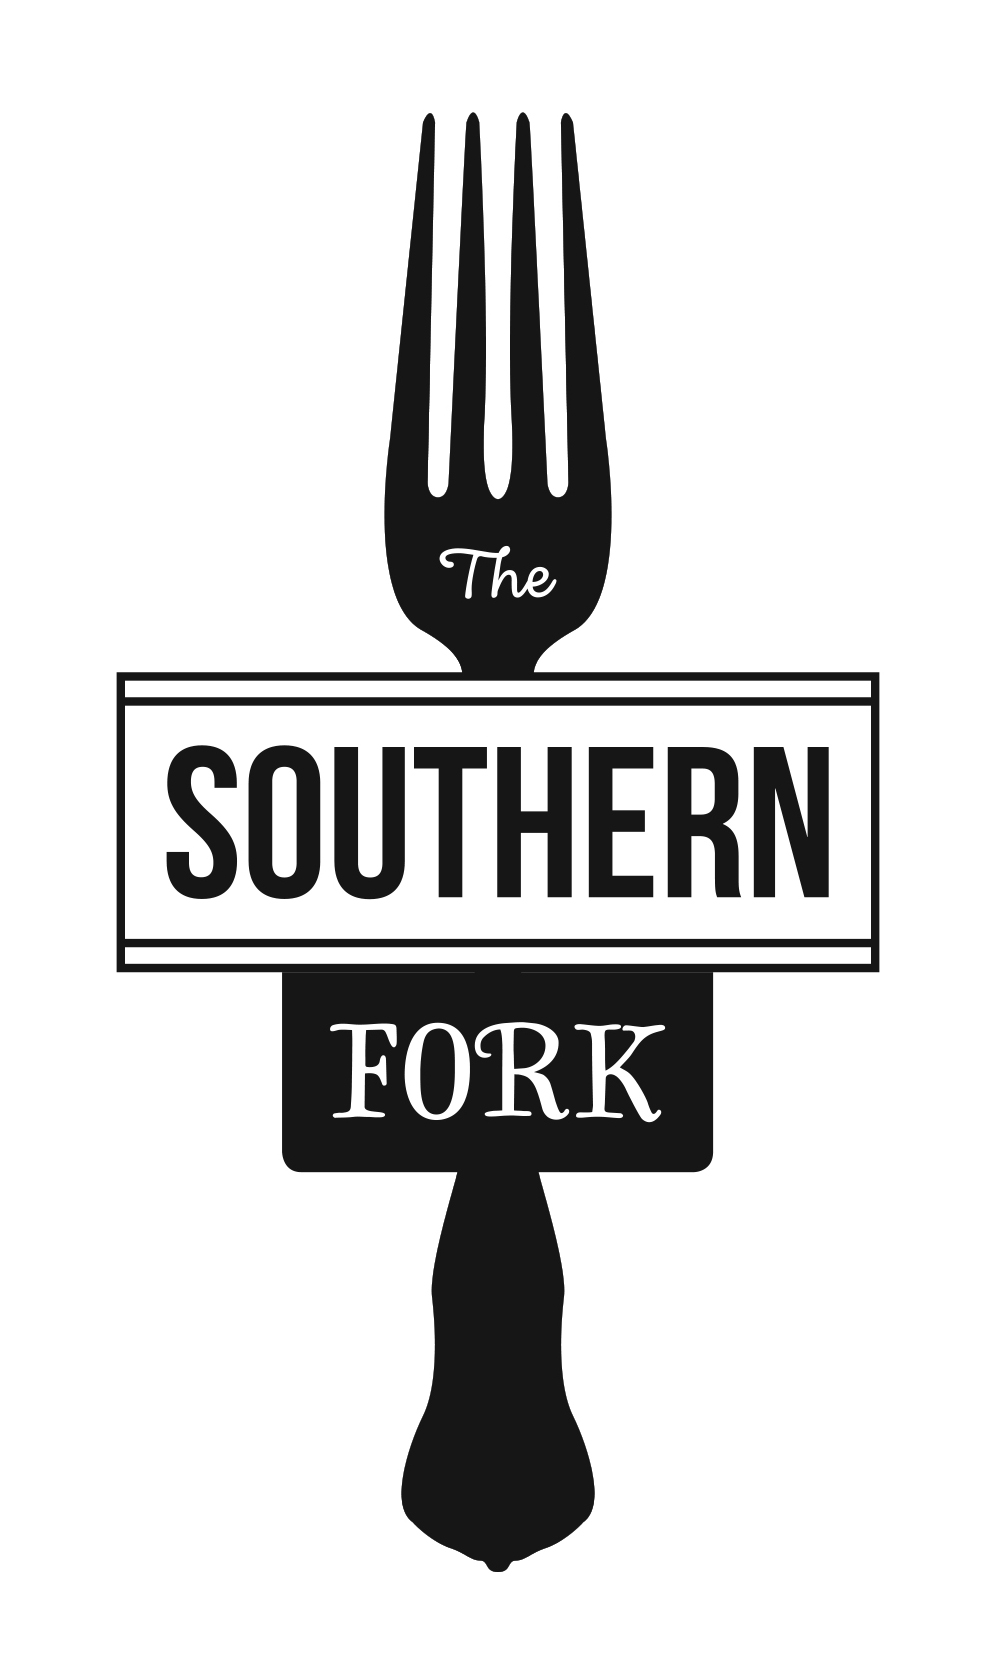 SB_SouthernFork logo.jpg